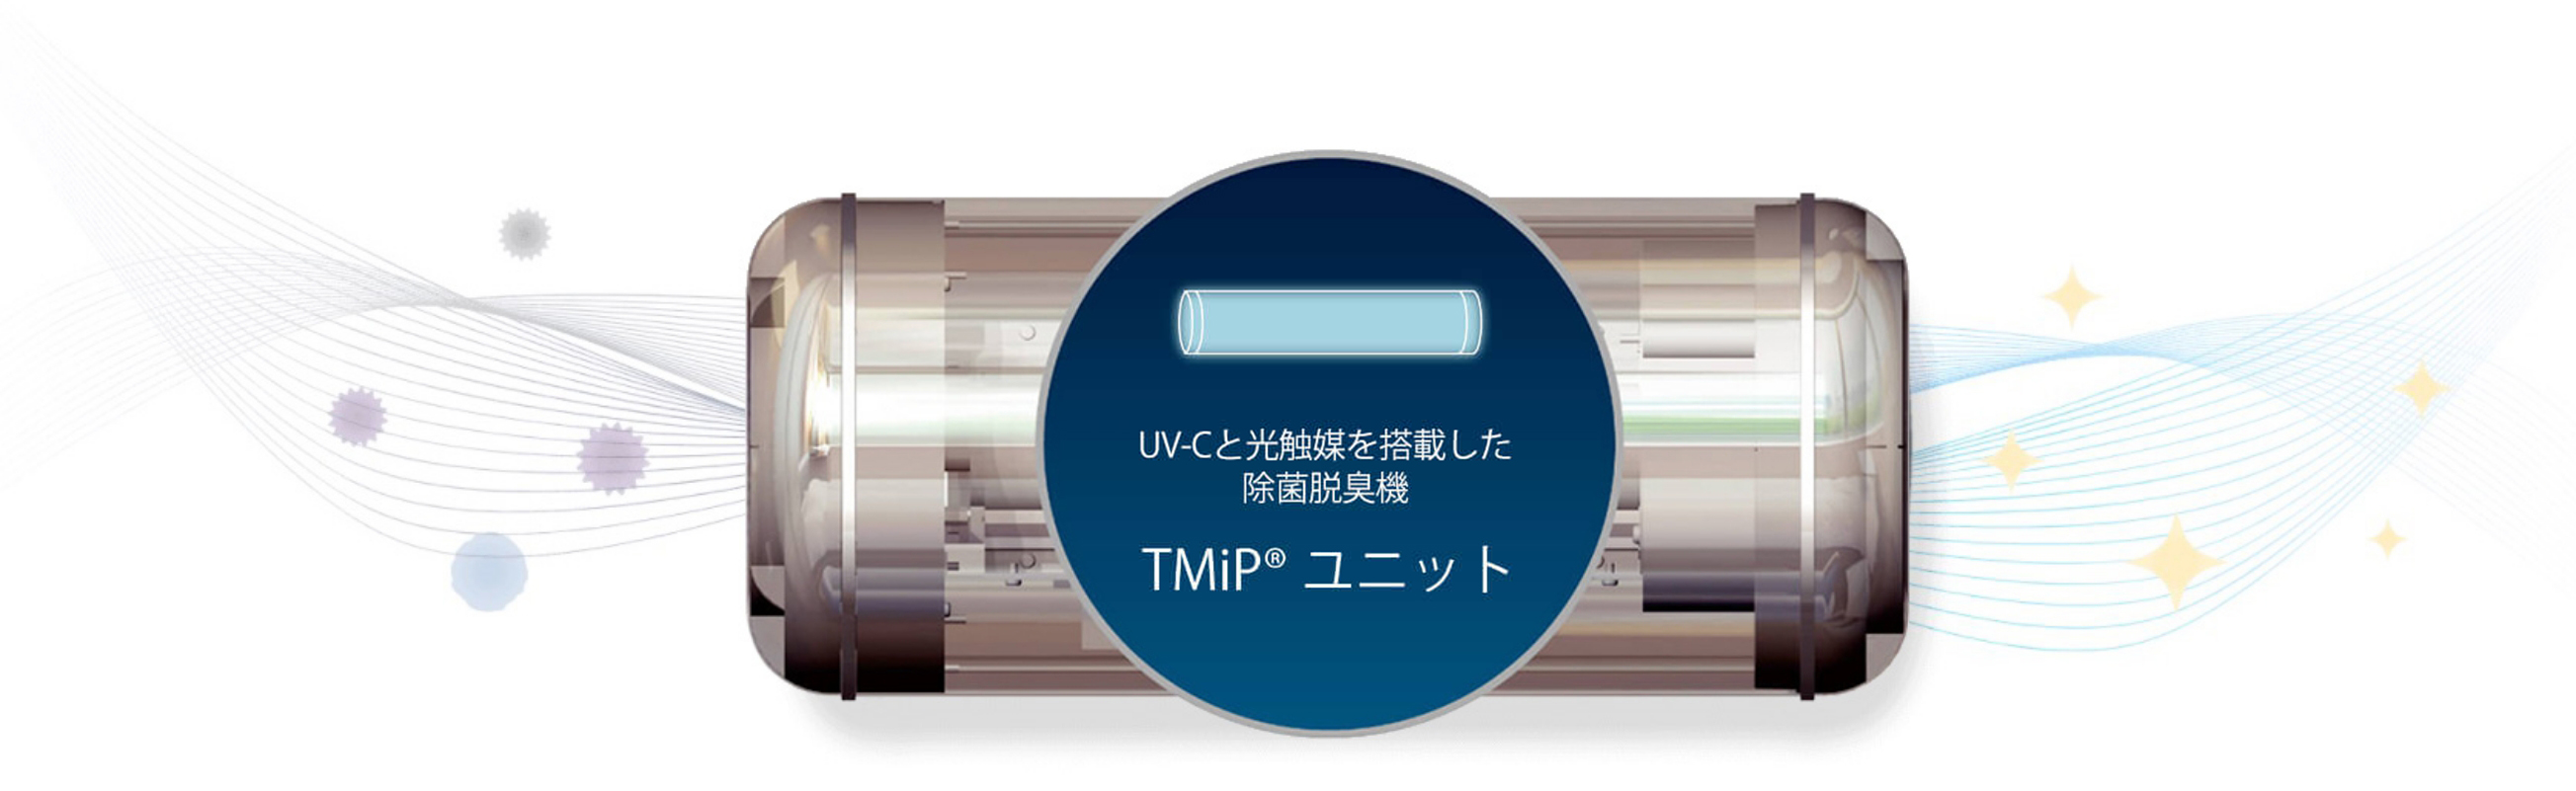 UV-Cと光触媒を搭載した除菌脱臭機 TMiP®ユニット